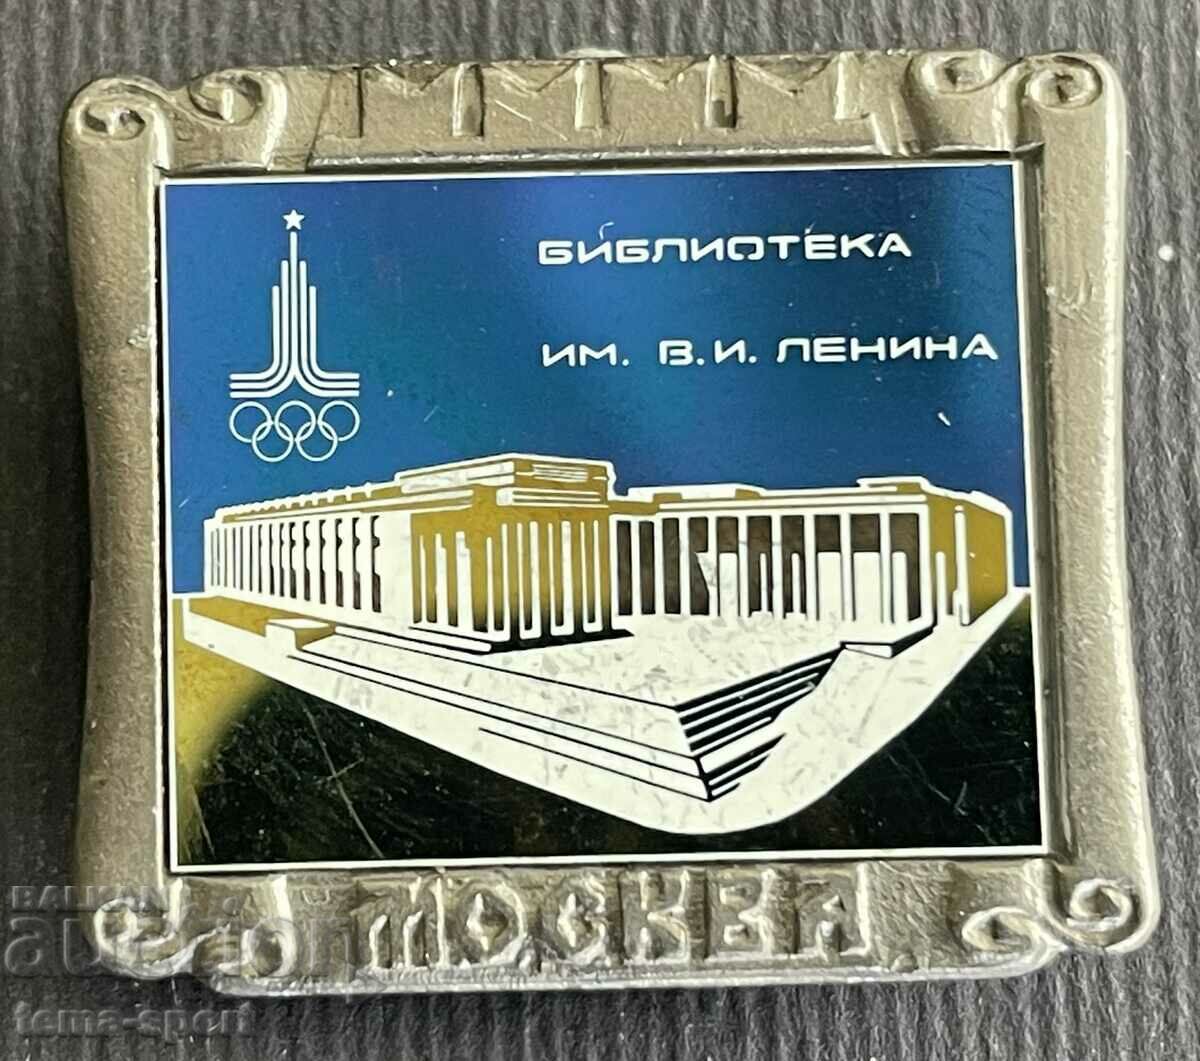 581 СССР олимпийски знак Олимпиада Москва 1980г. Библиотека